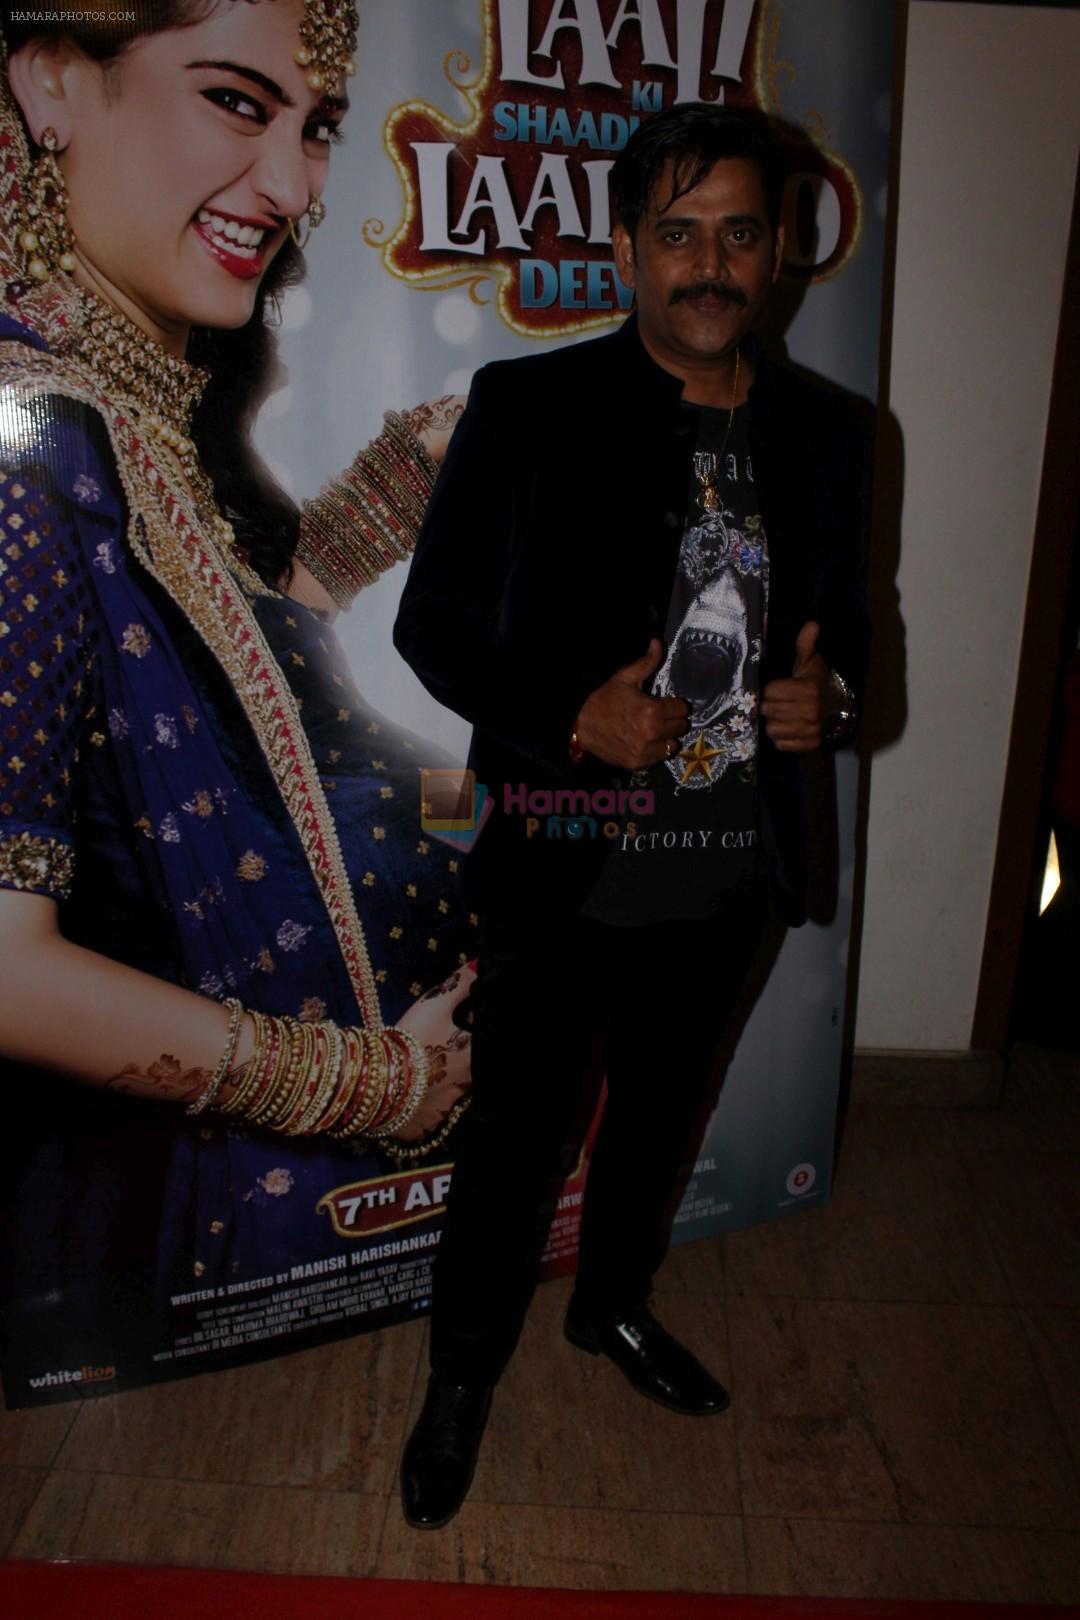 Ravi Kishan at Sangeet Ceremony For Film Laali Ki Shaadi Mein Laaddoo Deewana on 21st March 2017